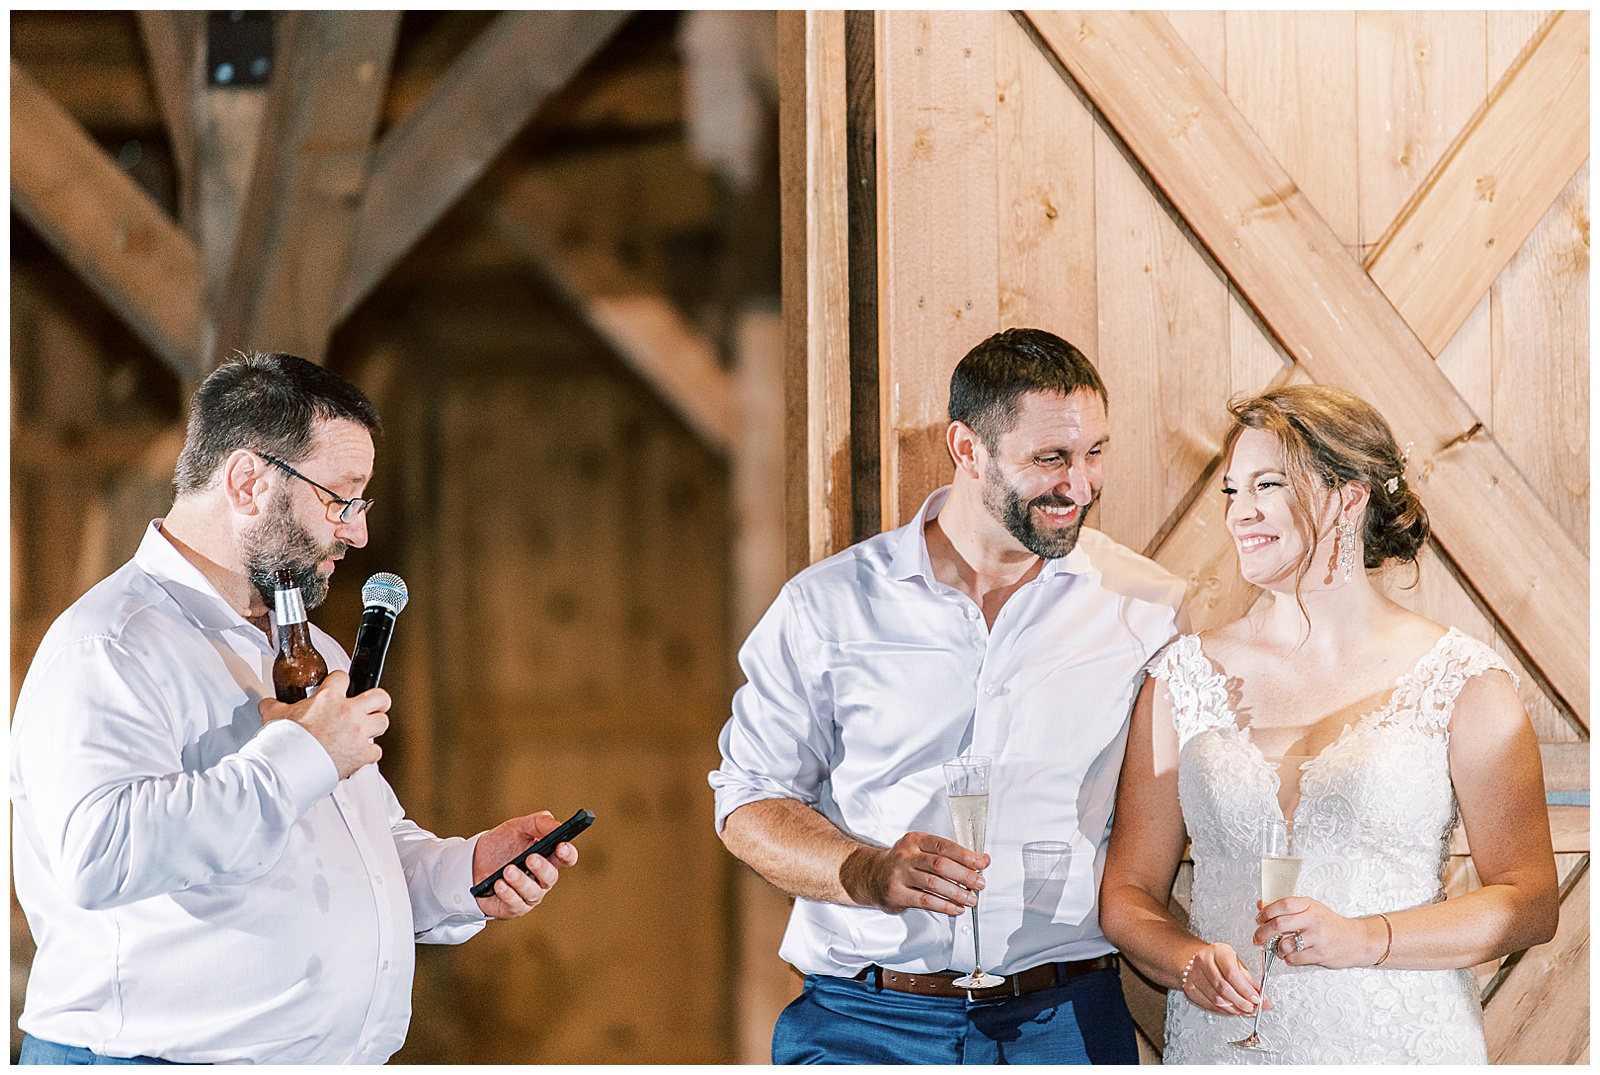 bride and groom at indoor summer wedding reception in wooden barn